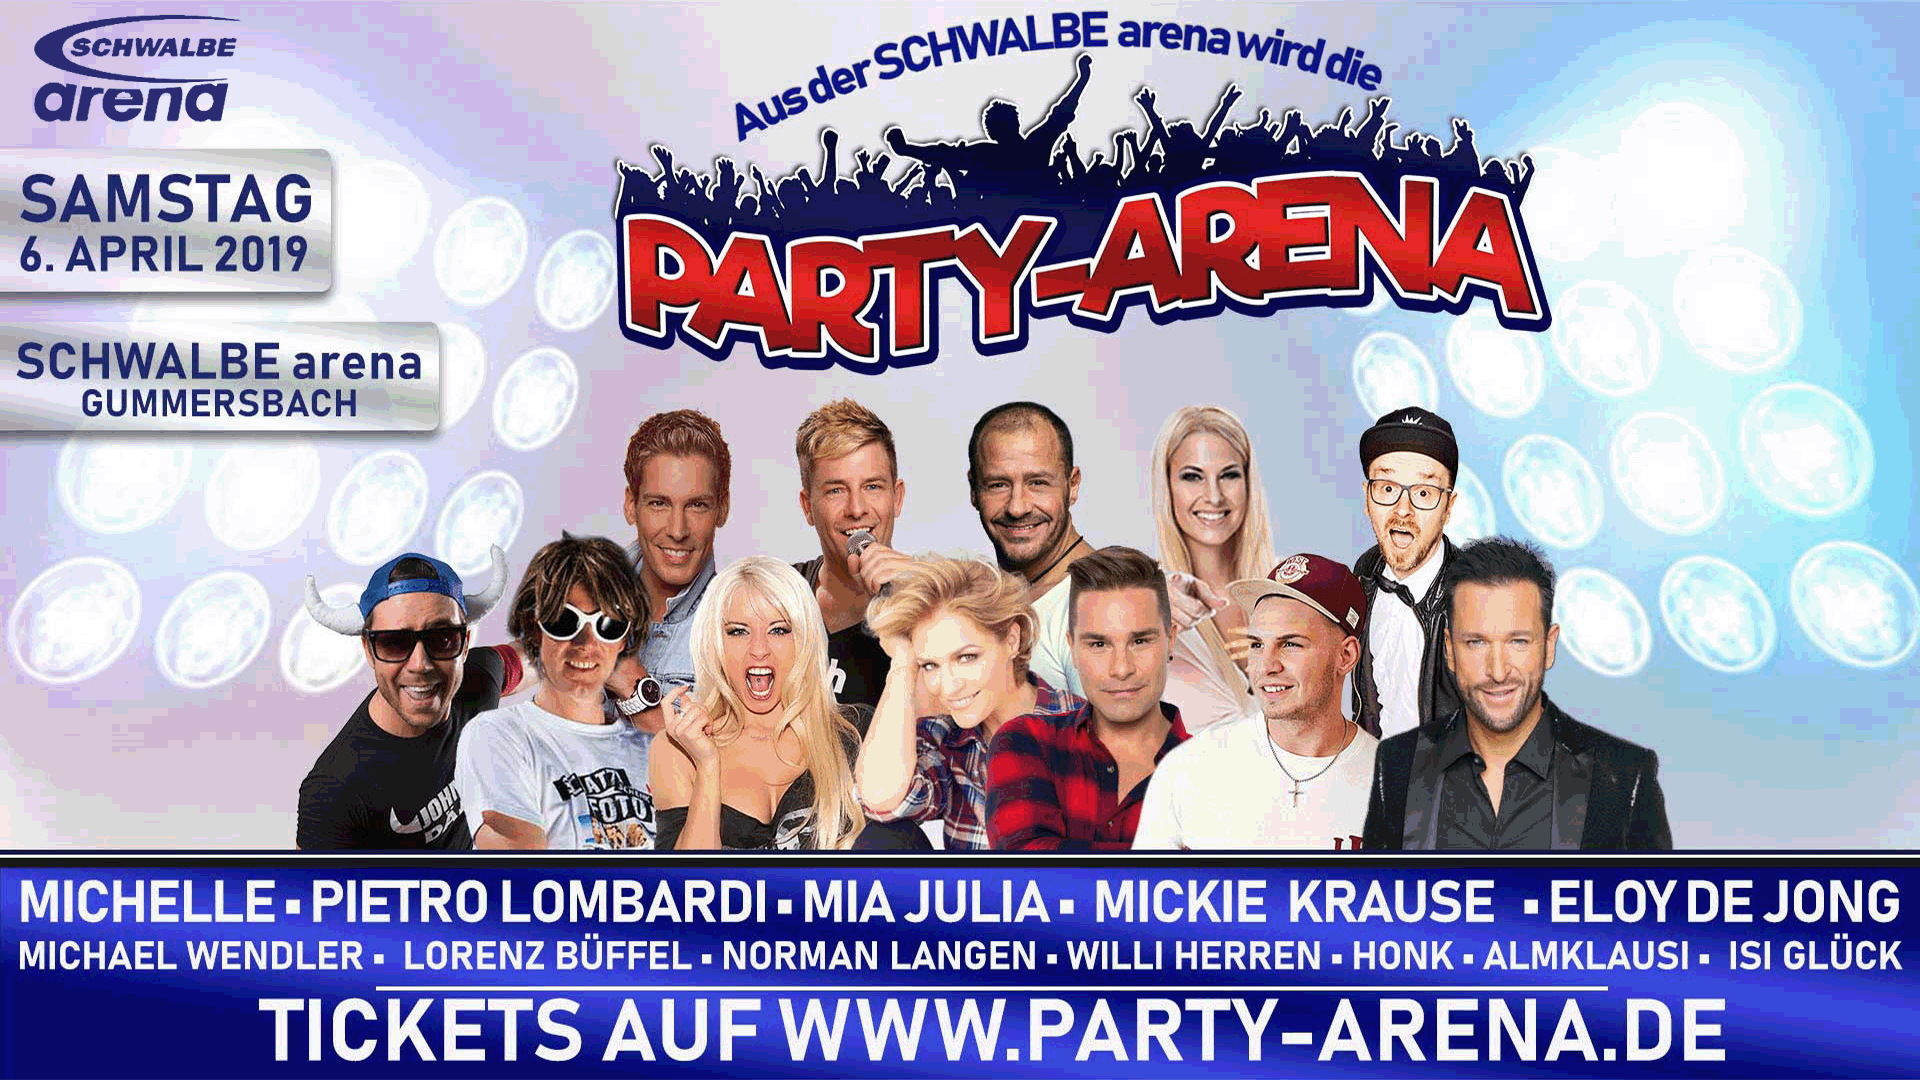 SCHWALBE arena | Party-Arena